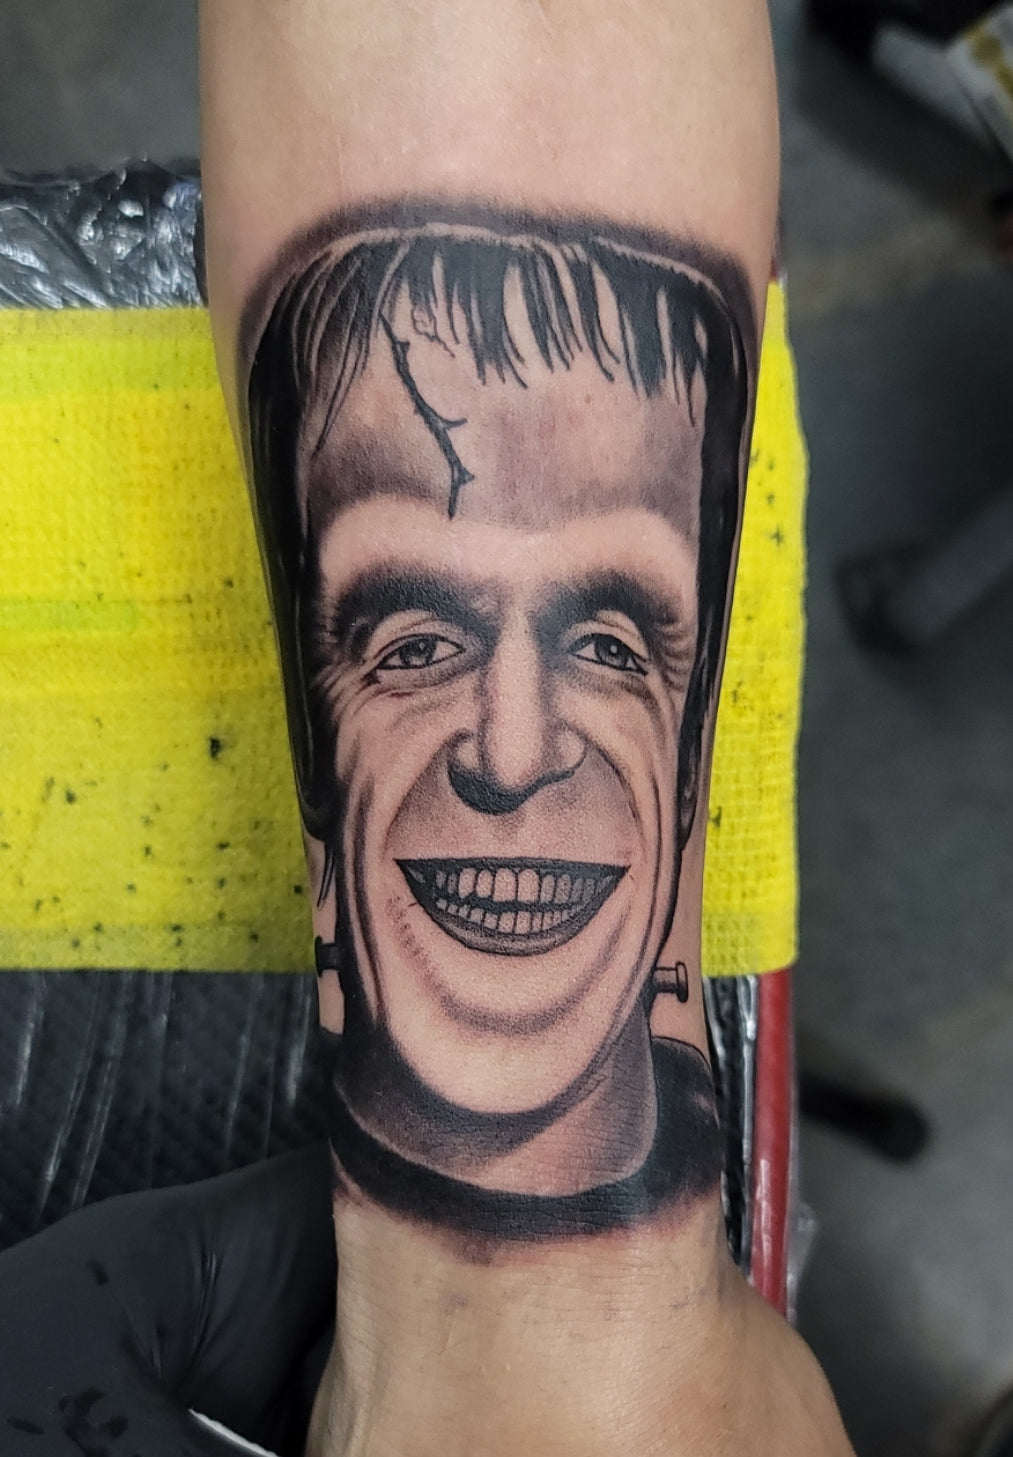 1 Horror/Movie Character Portrait Tattoo